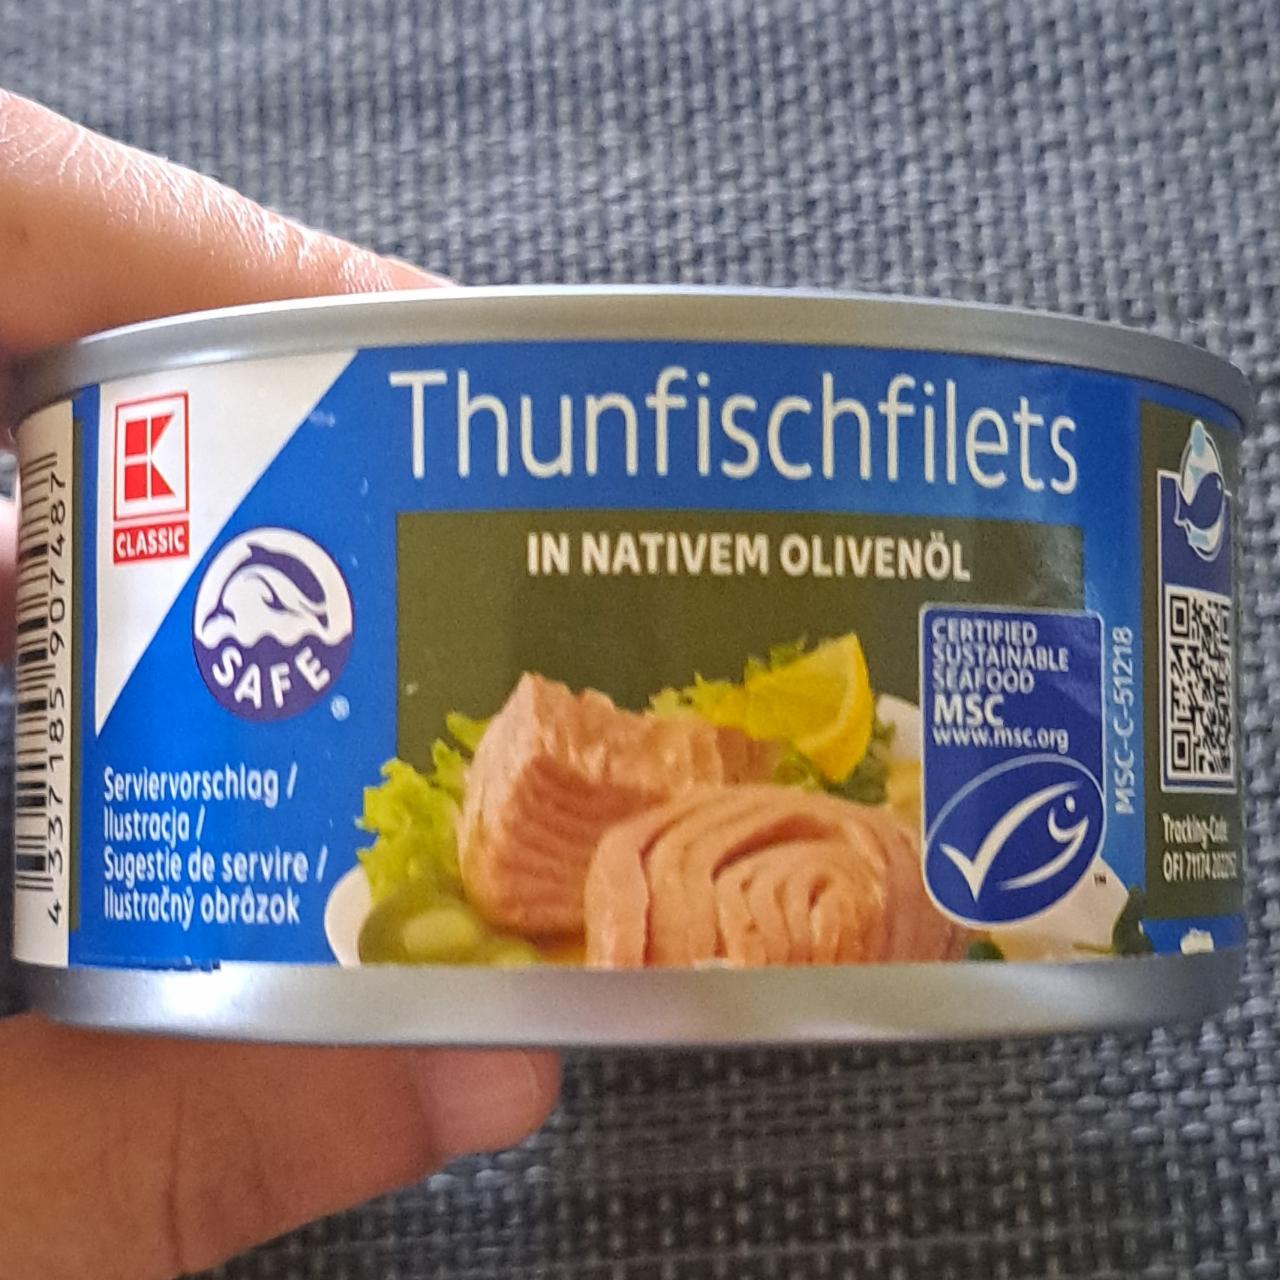 Fotografie - Thunfischfilets in nativem olivenöl K-Classic